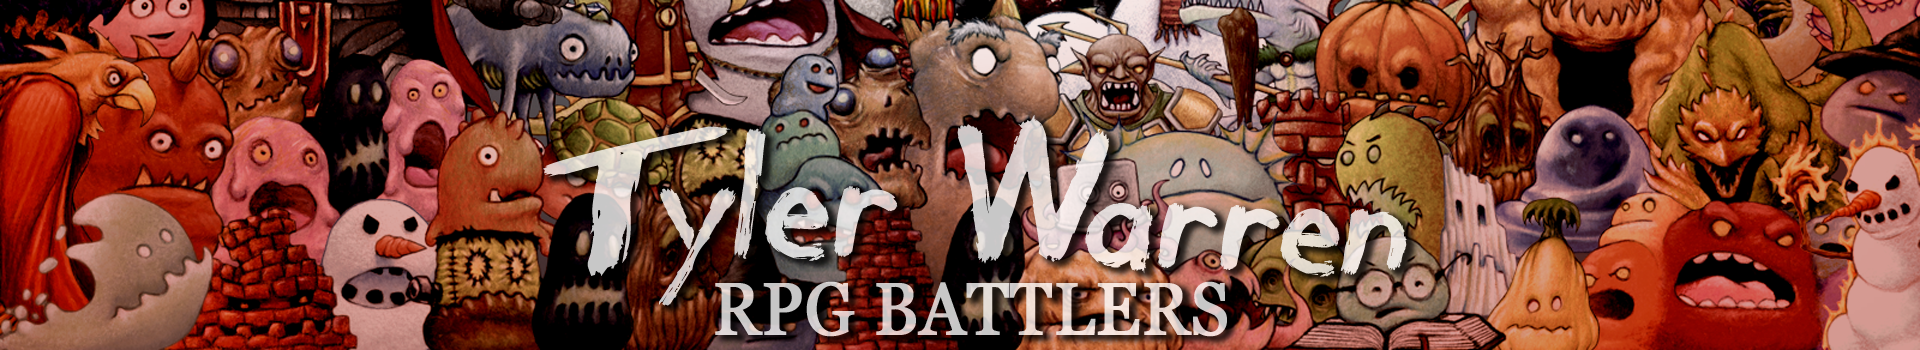 Tyler Warren RPG Battlers - 2nd 50 Monsters